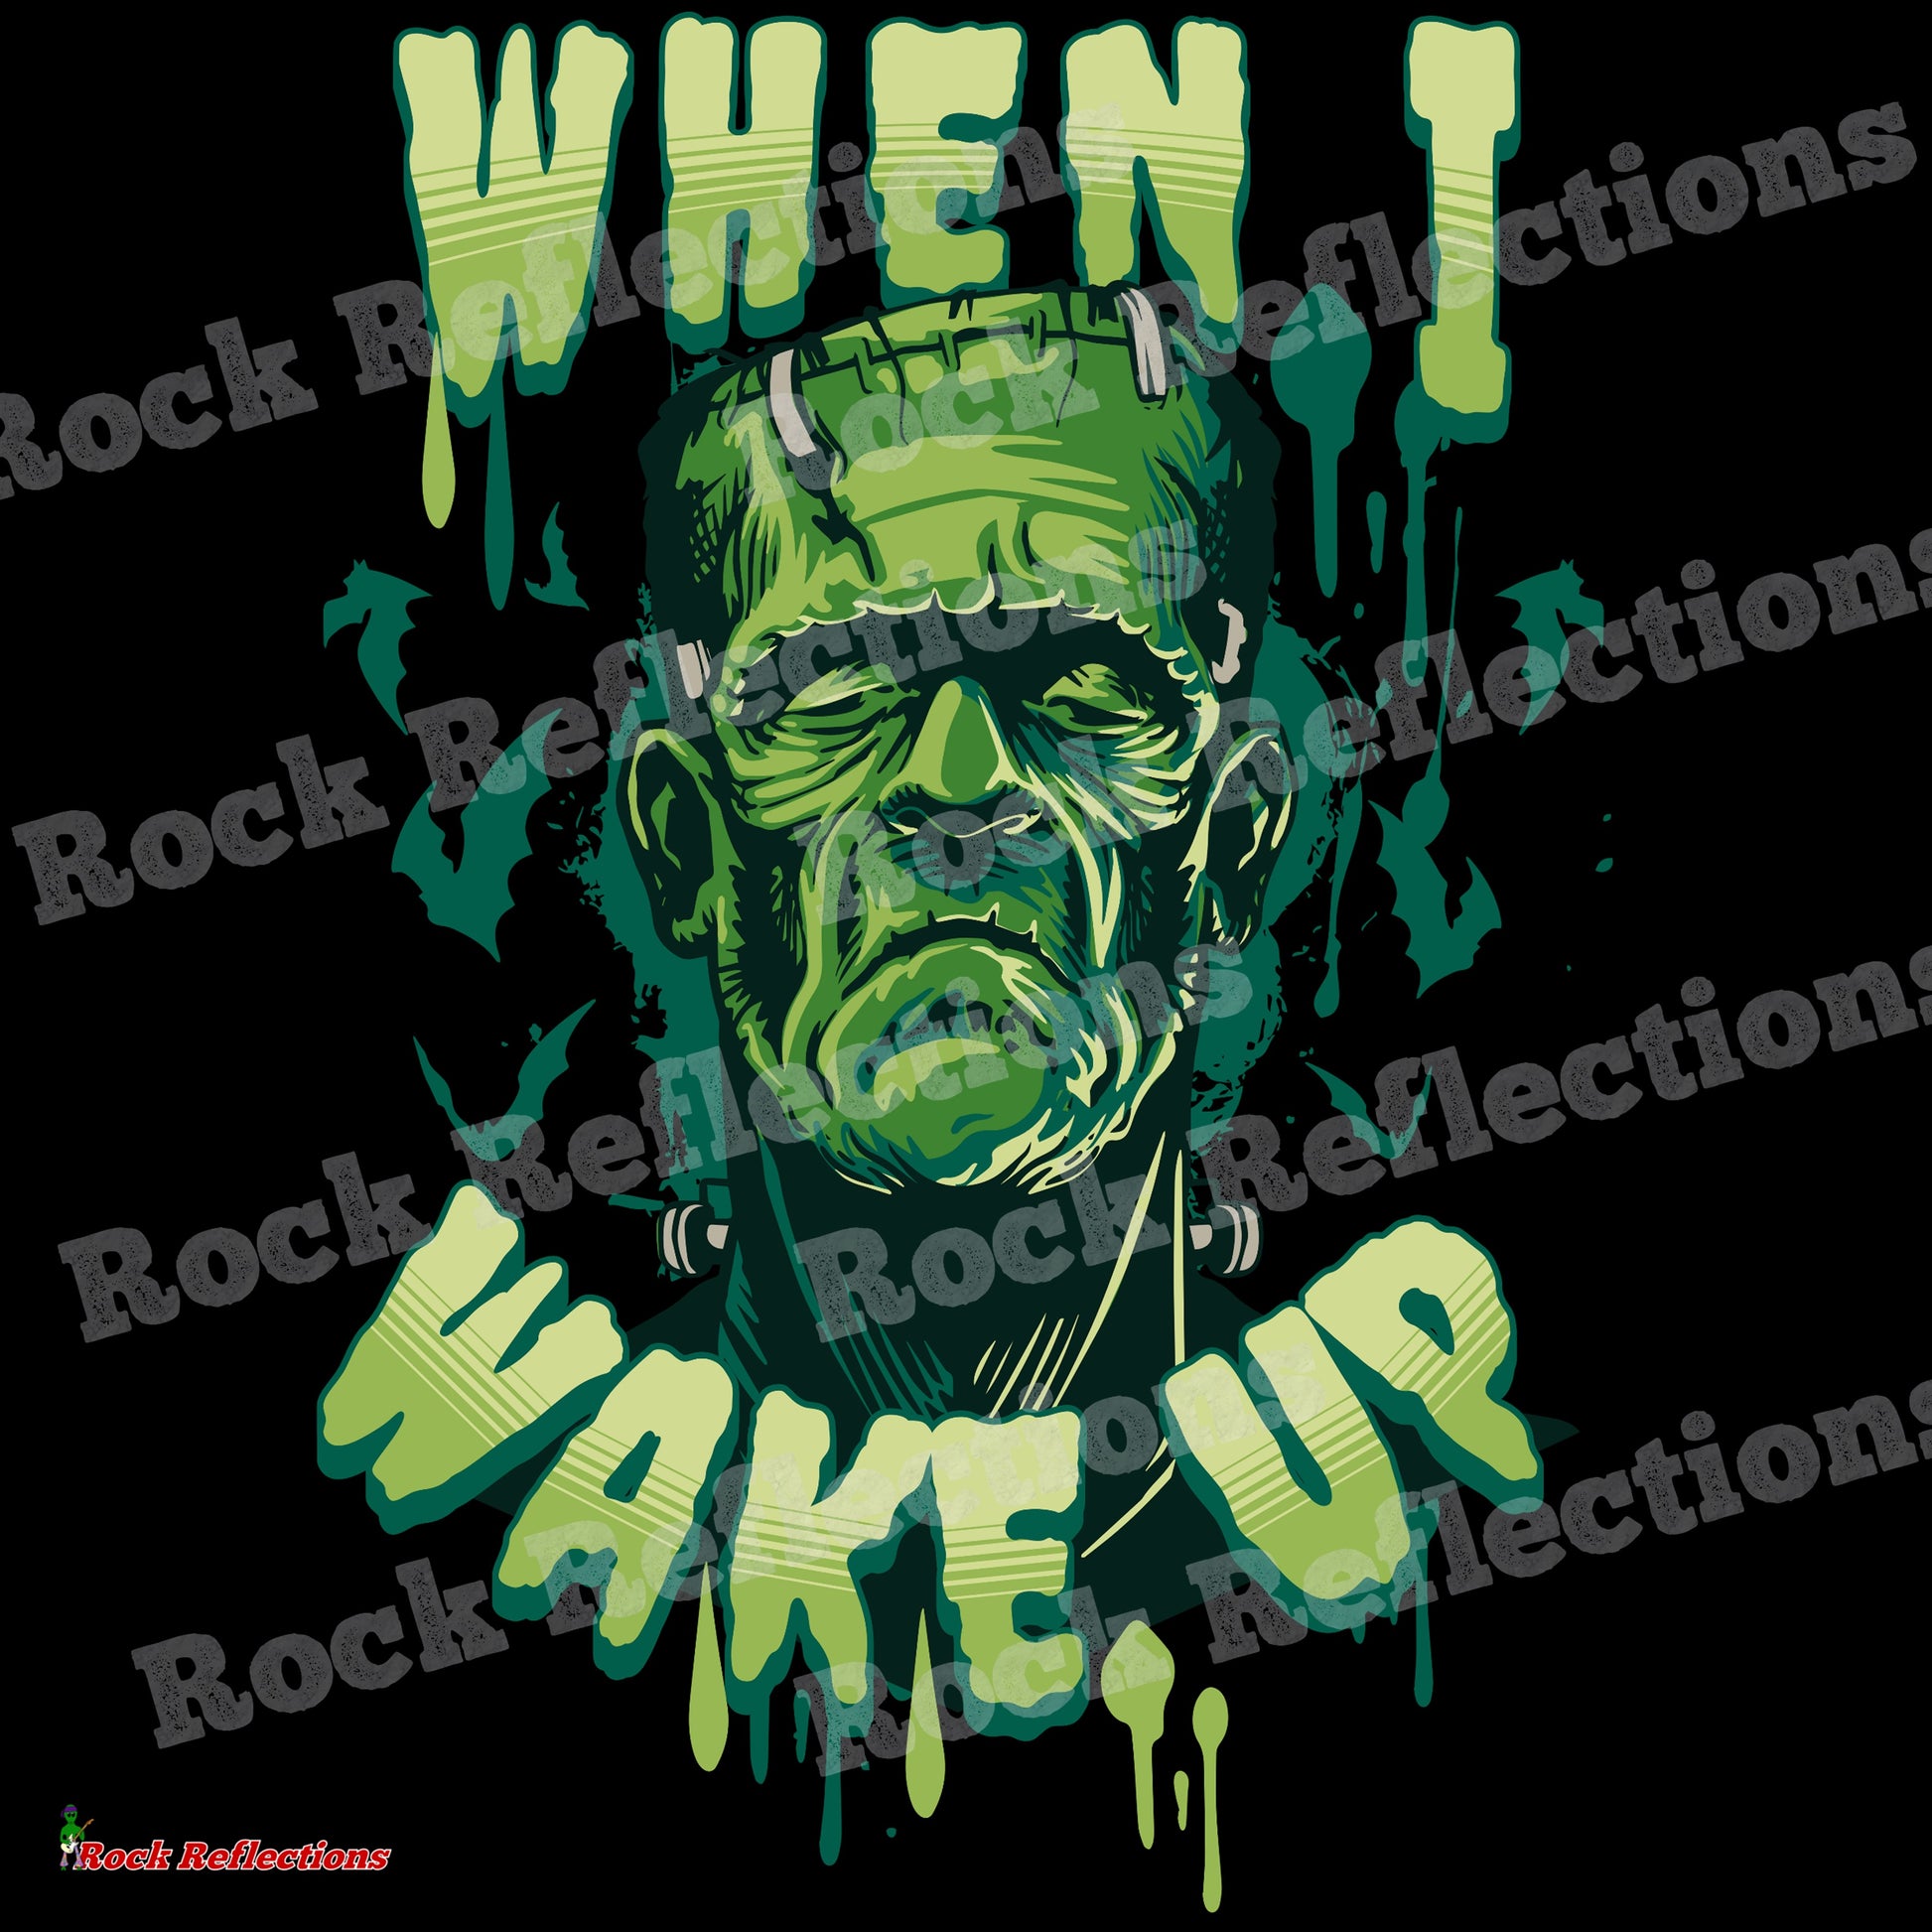 Frankenstein Wake Up T-Shirt SPOD